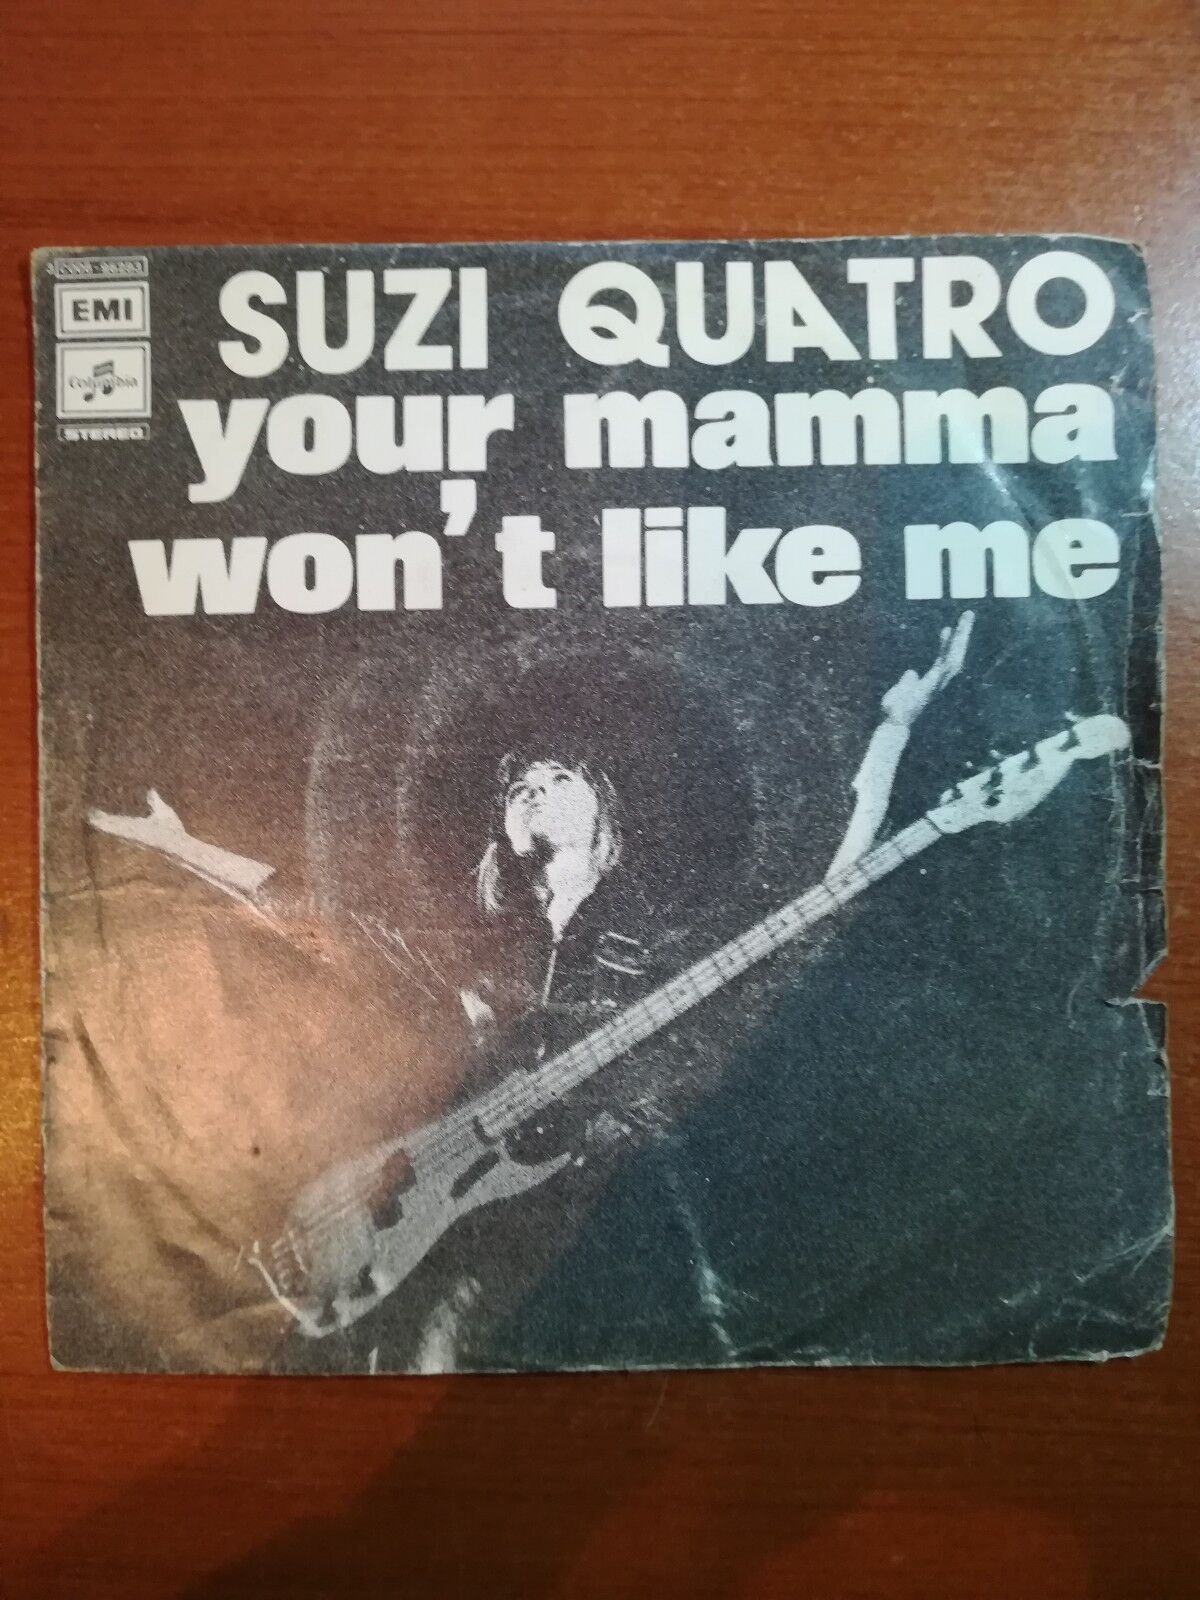 Your mamma won't like me - Suzi quatro - 1976 - 45 giri - M